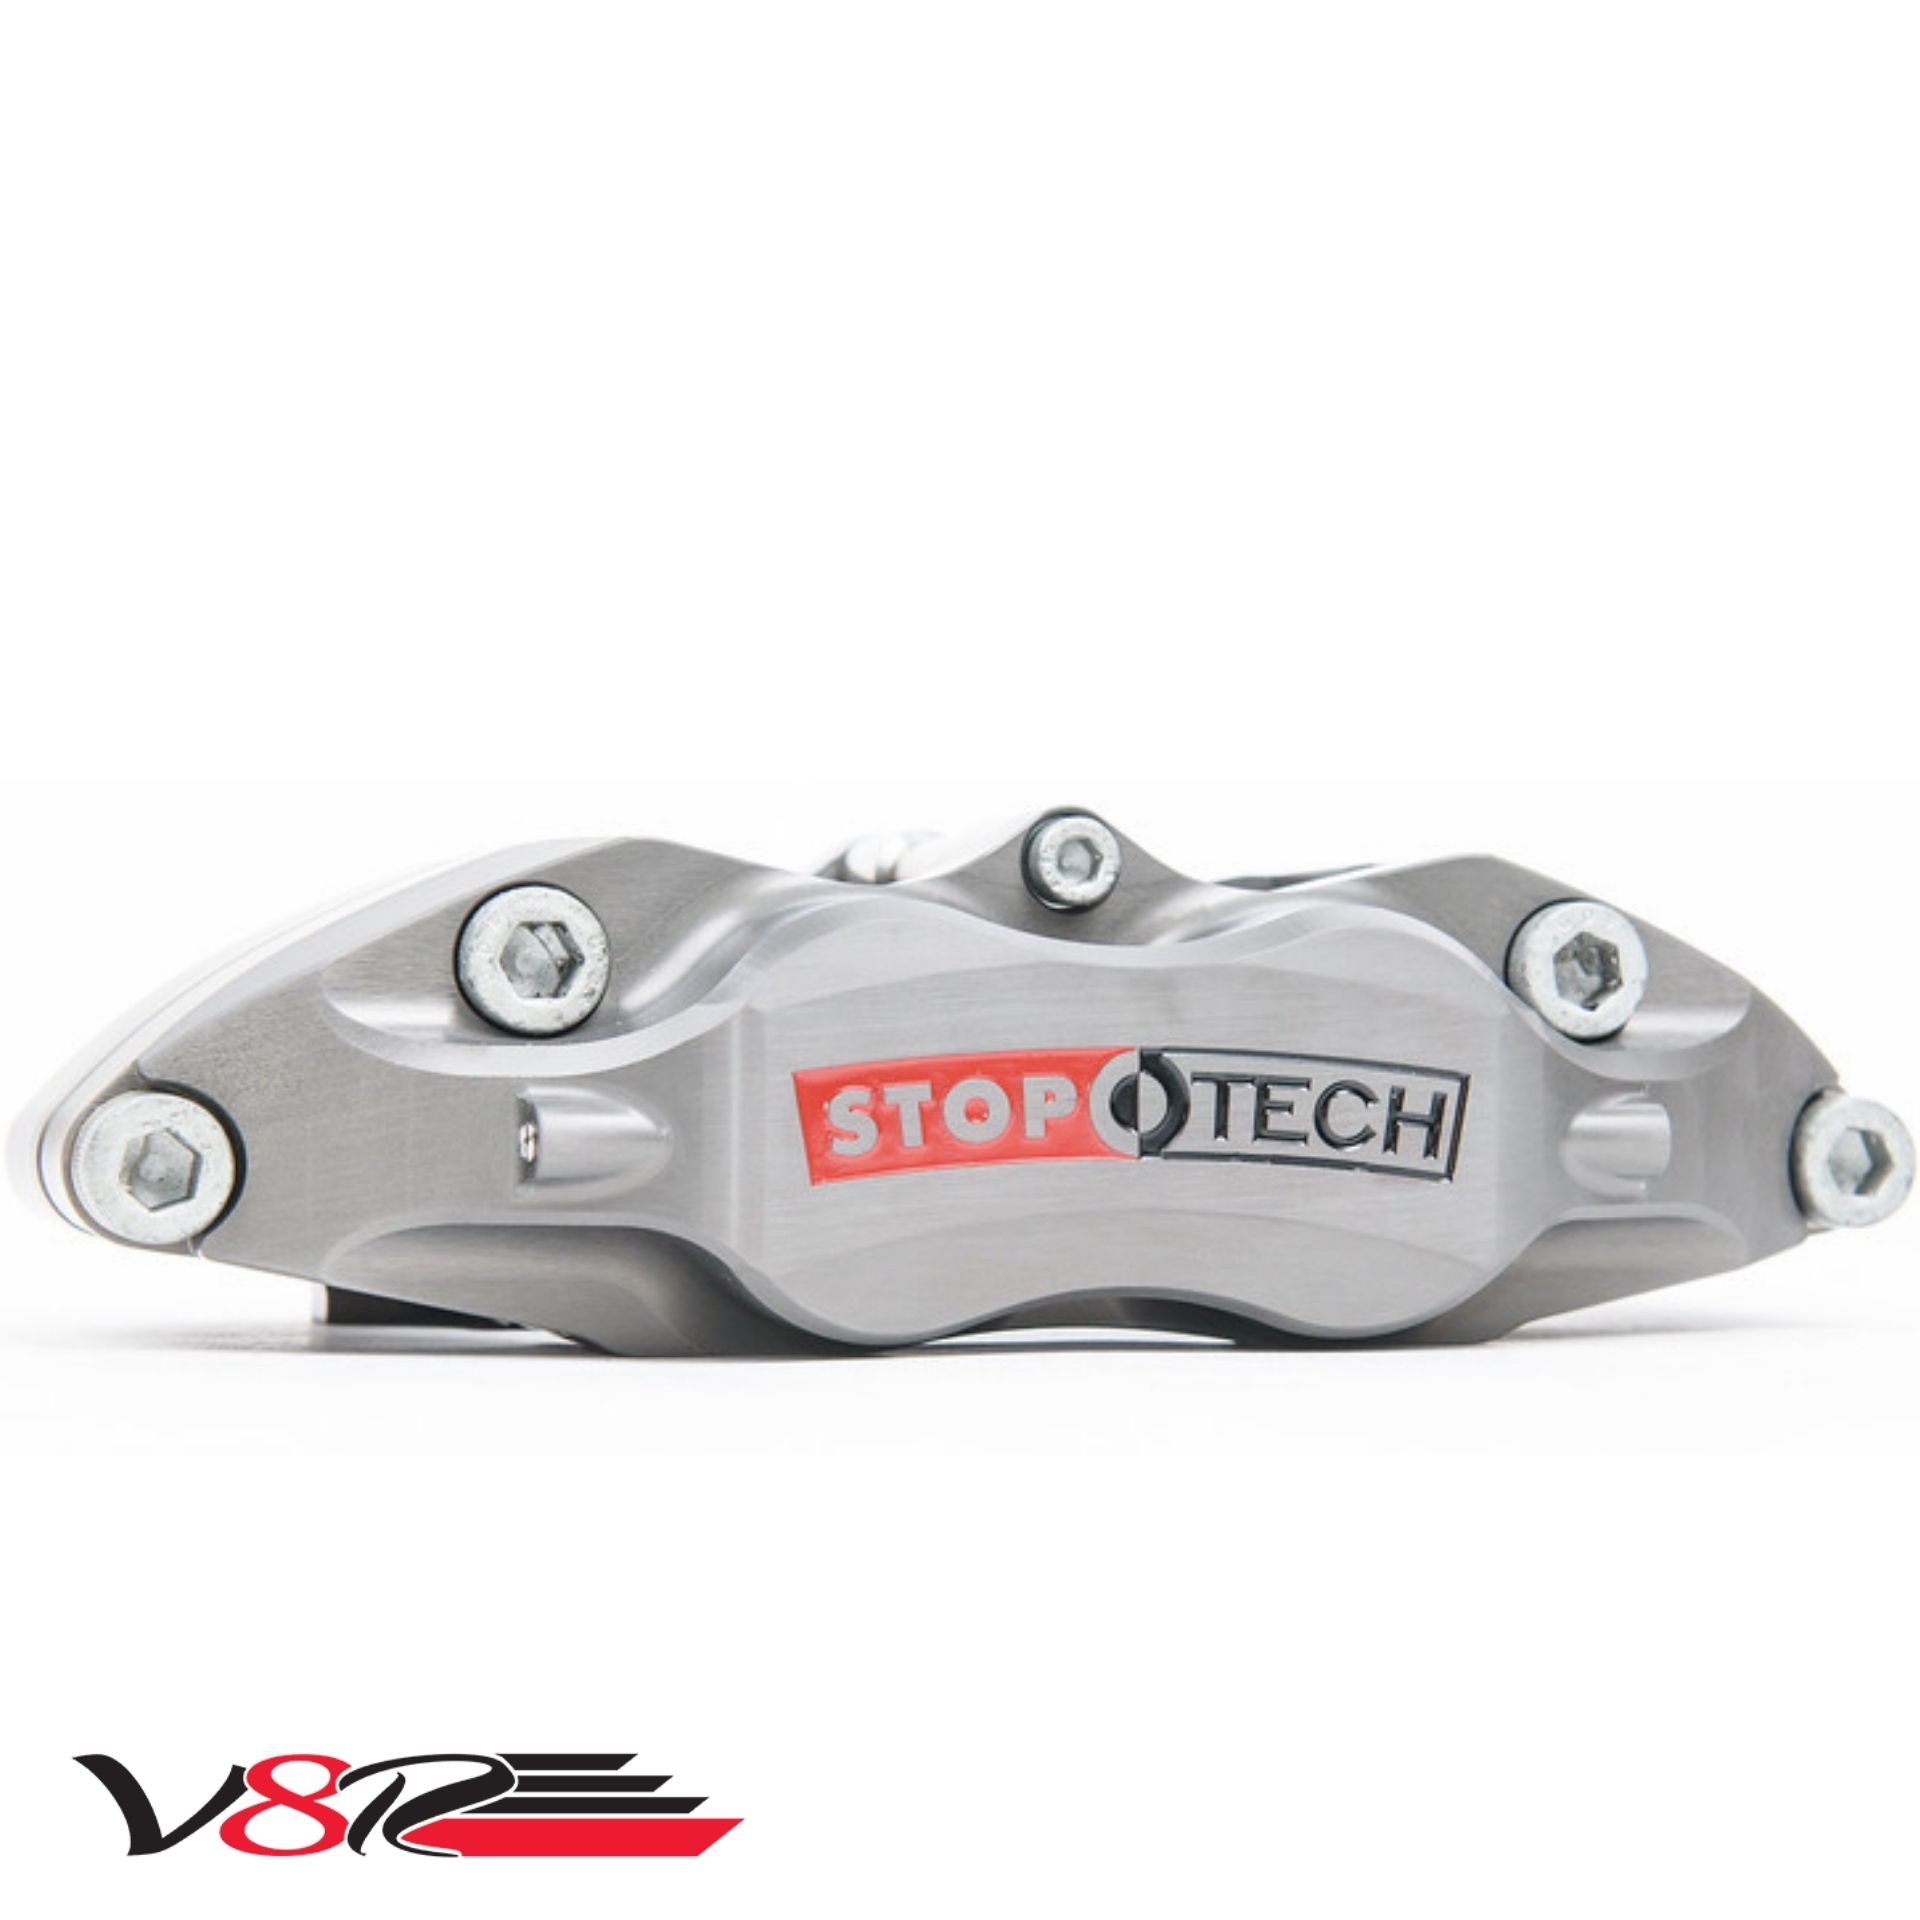 StopTech 908.40522 Rear Brake Kit Select Pack 